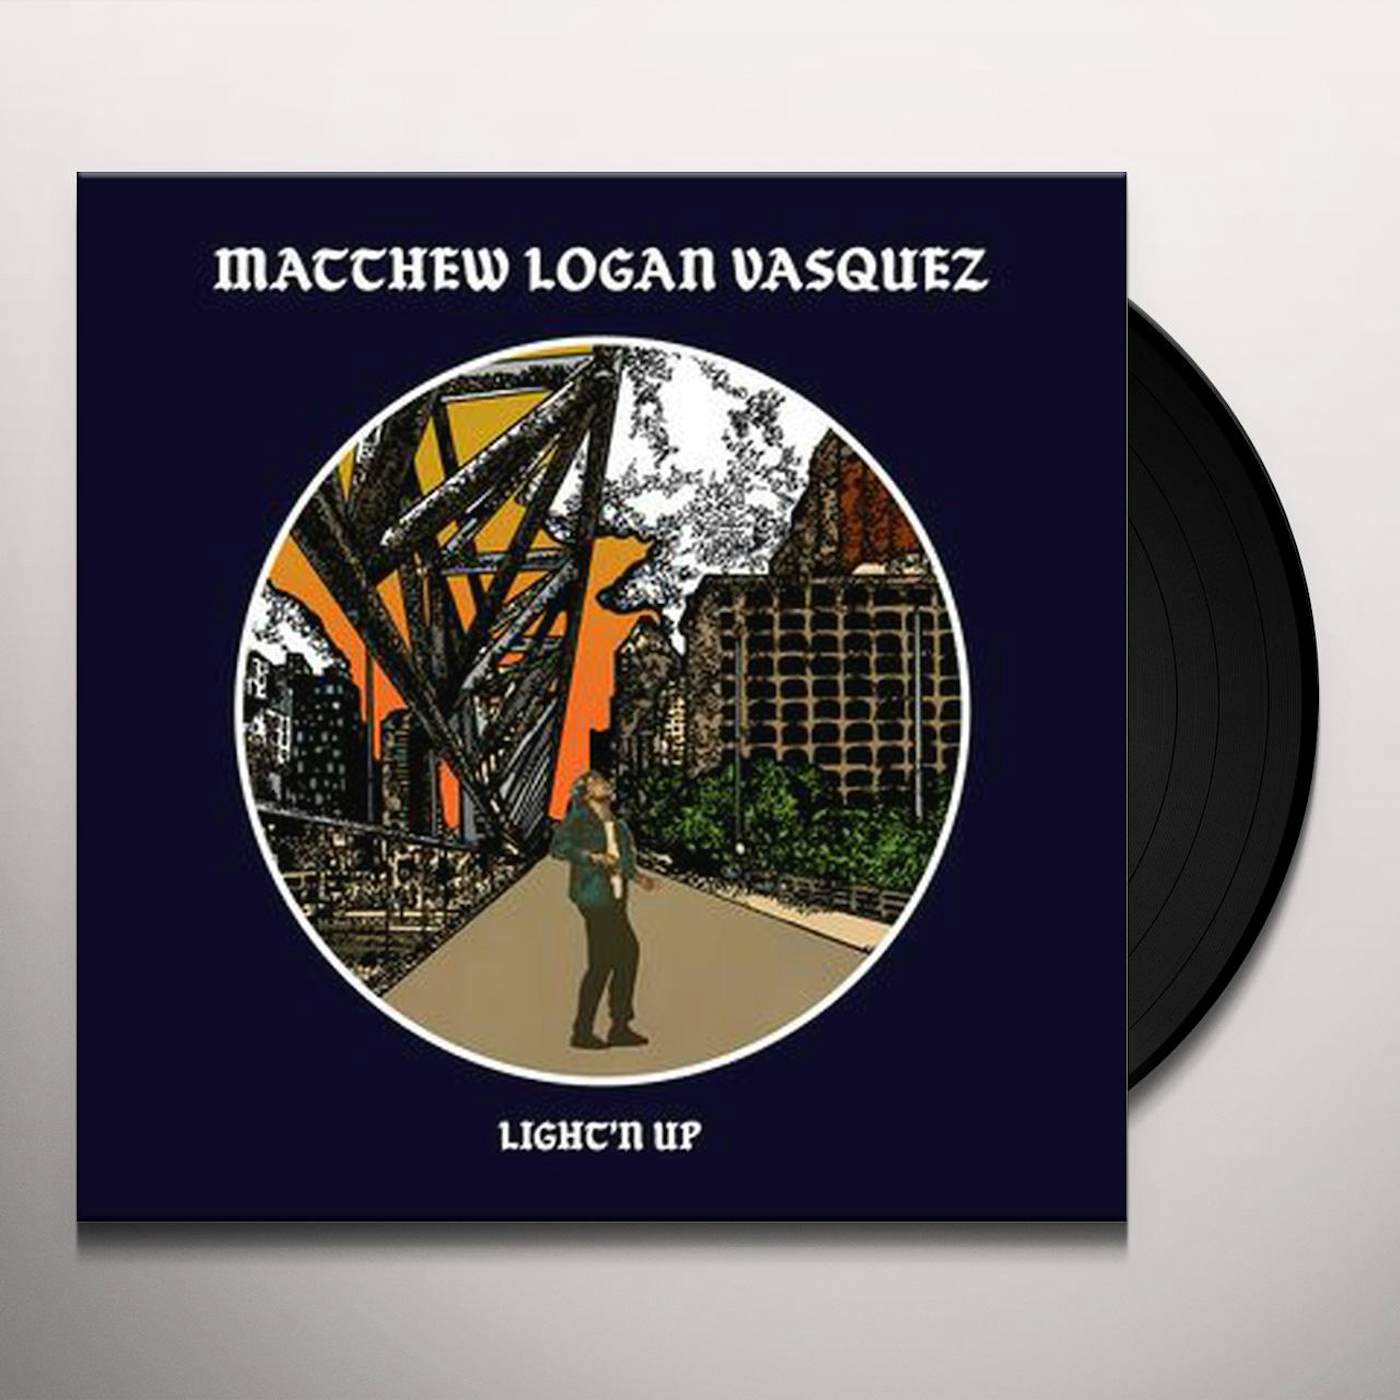 Matthew Logan Vasquez Light'n Up Vinyl Record